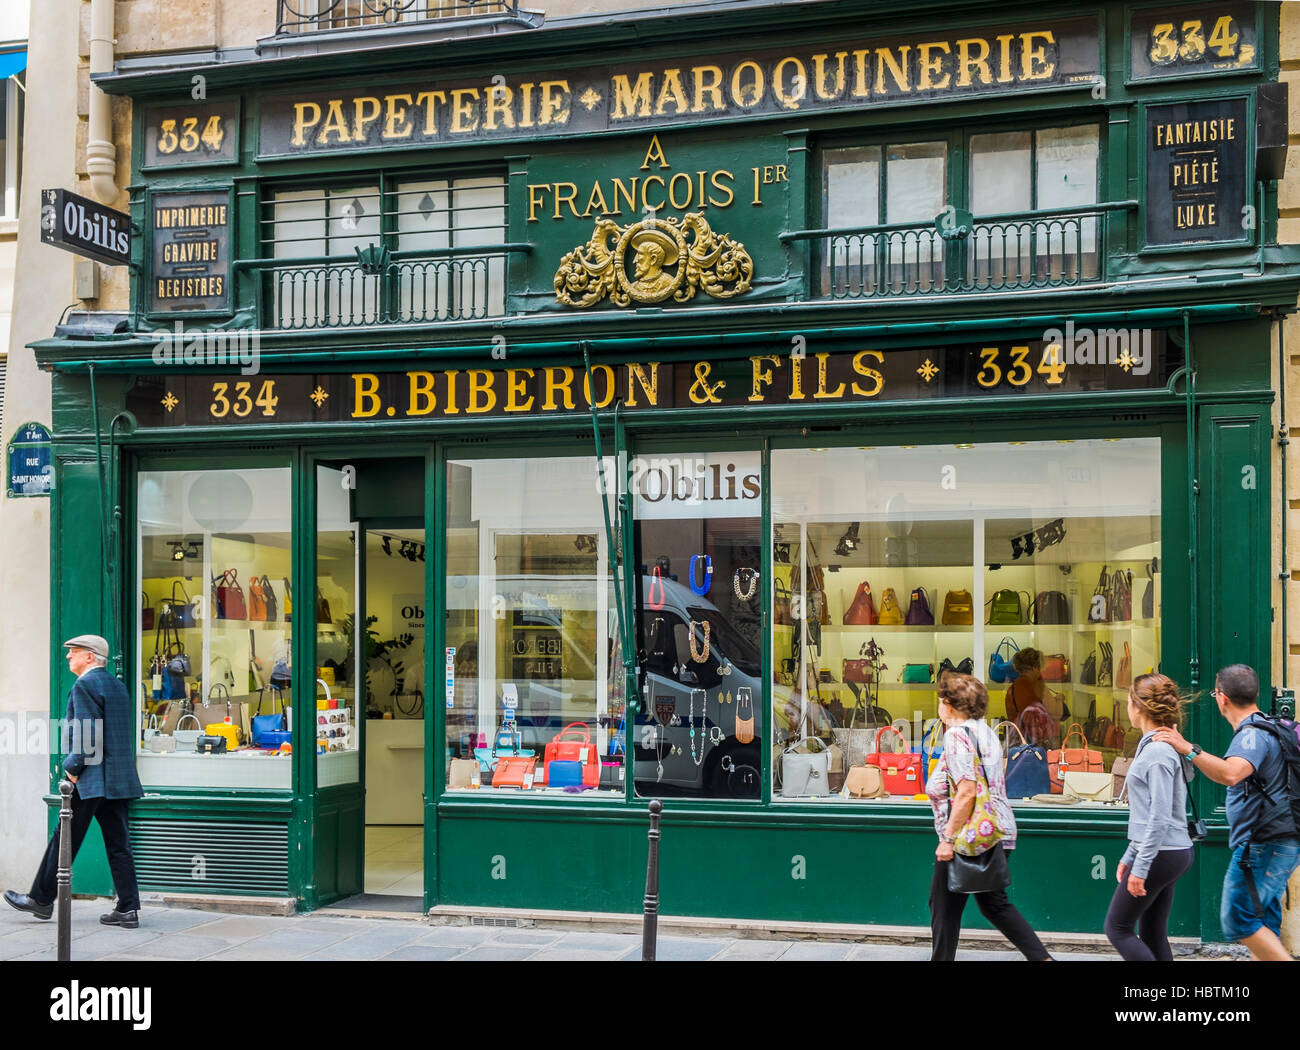 street scene in front of b. boberon & fils, leatherware Stock Photo